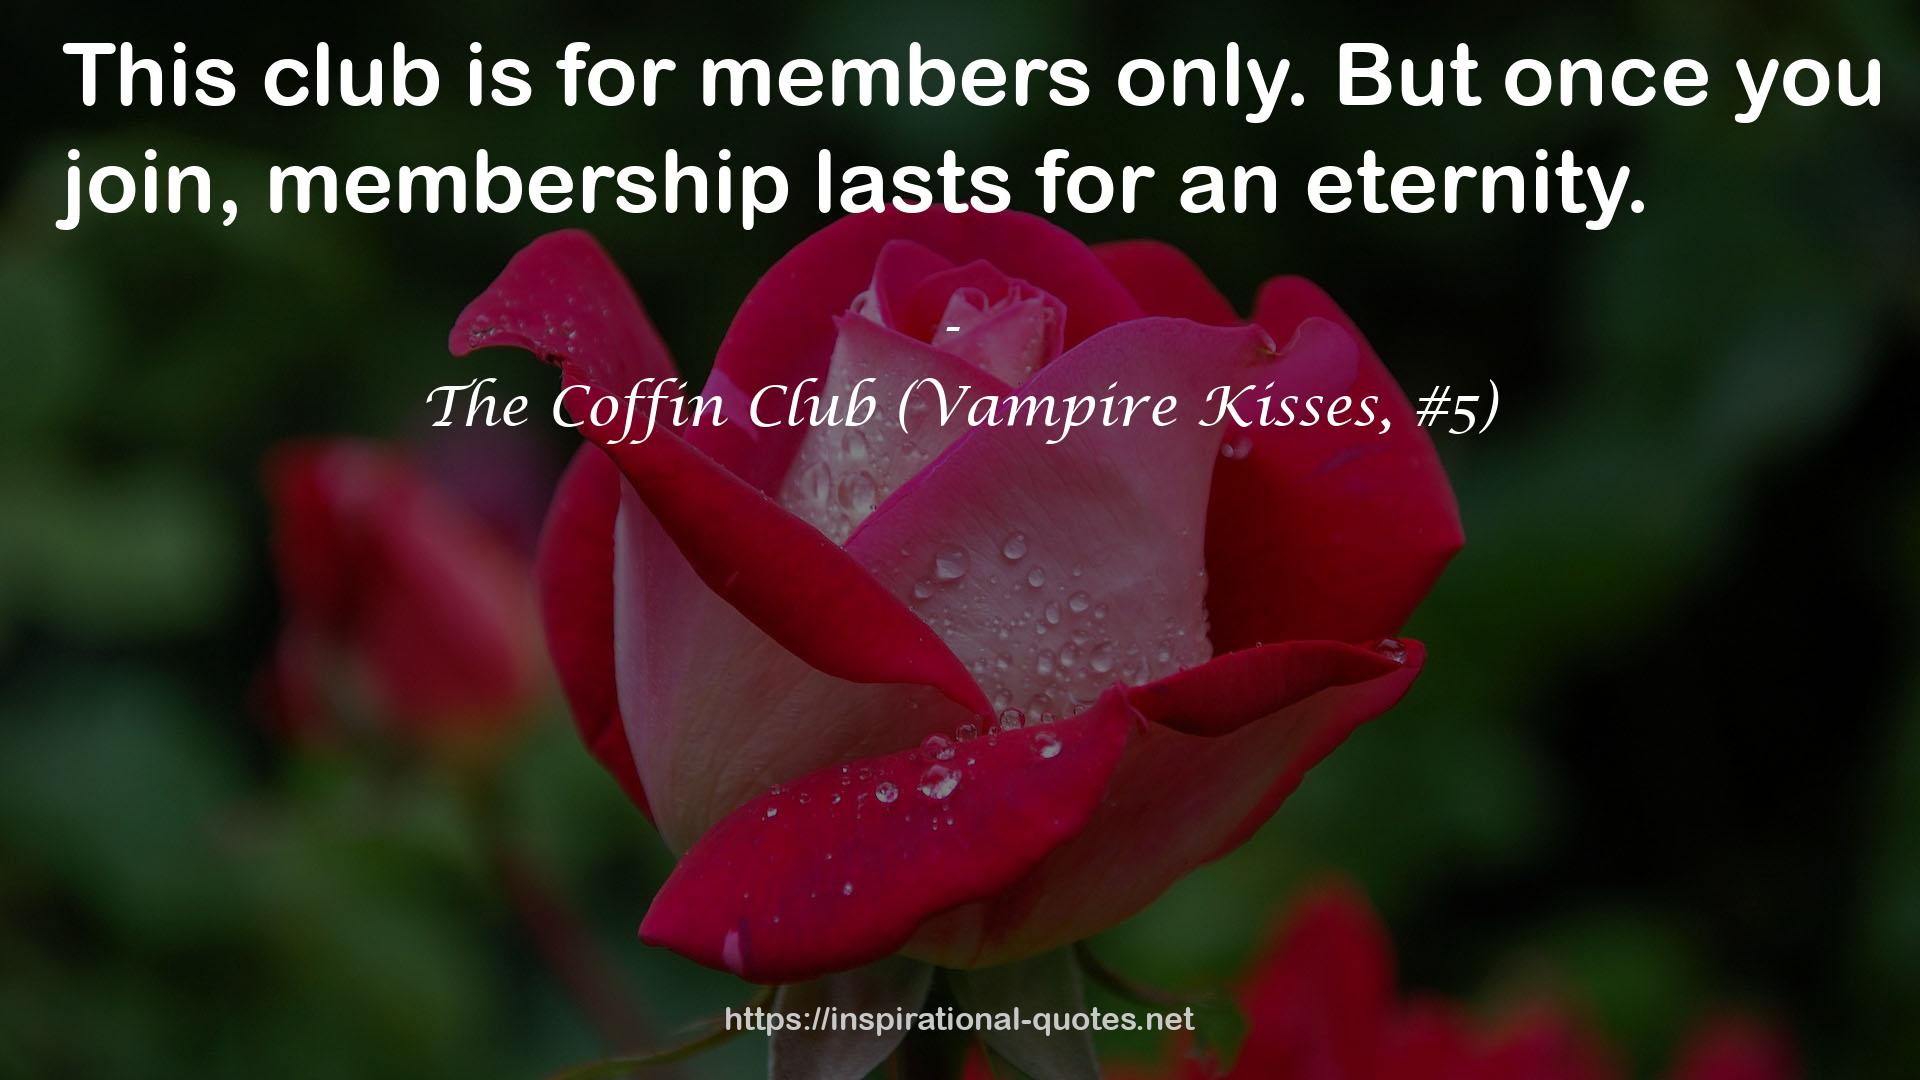 The Coffin Club (Vampire Kisses, #5) QUOTES